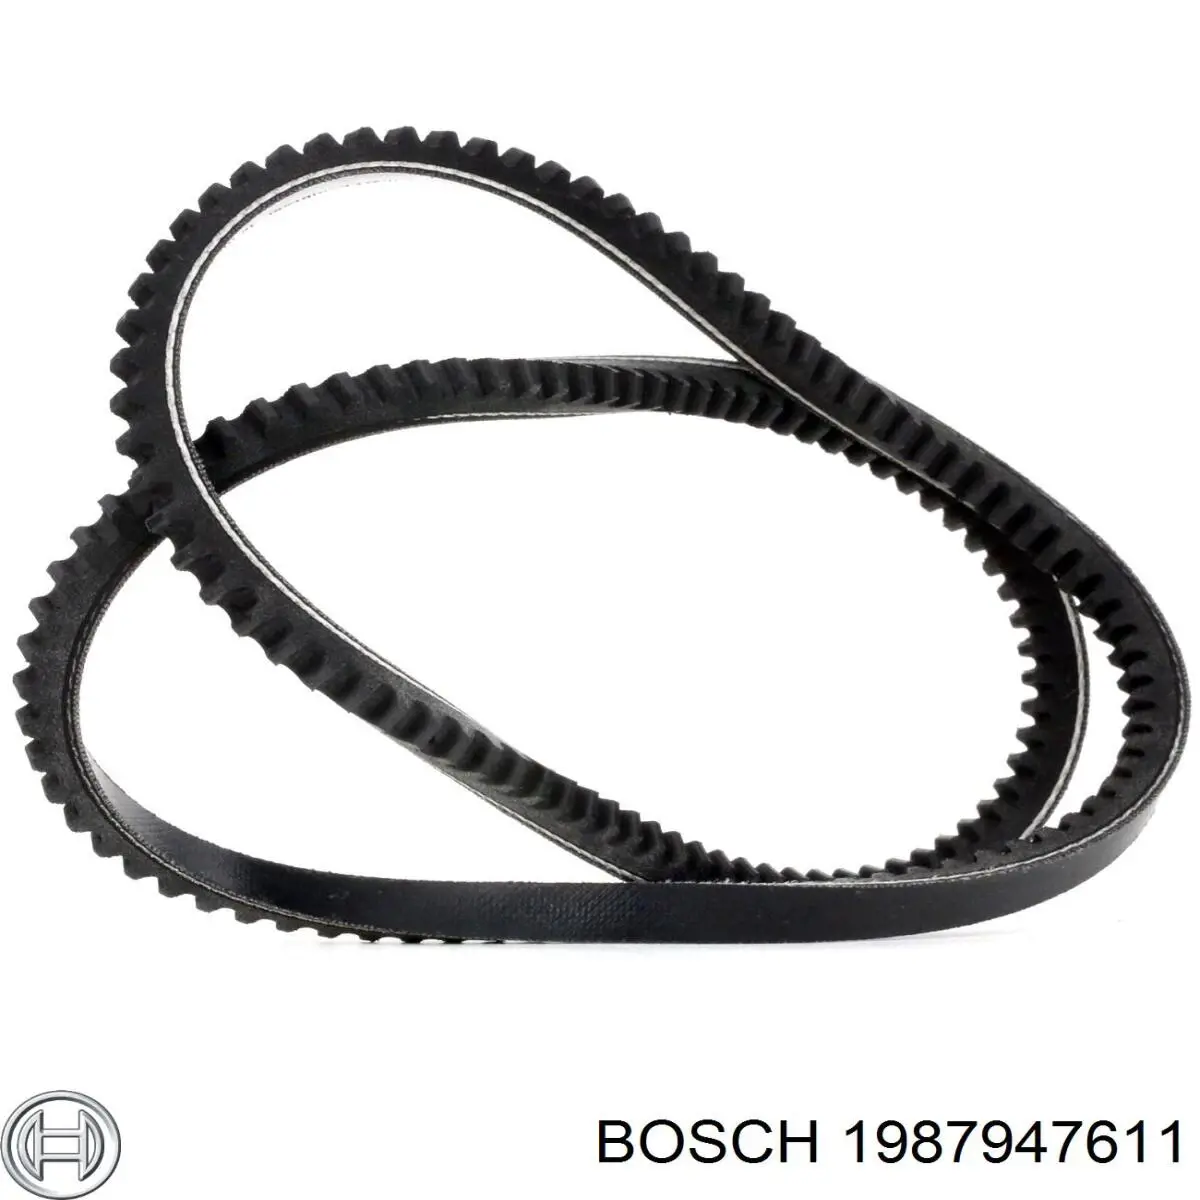 1987947611 Bosch correa trapezoidal